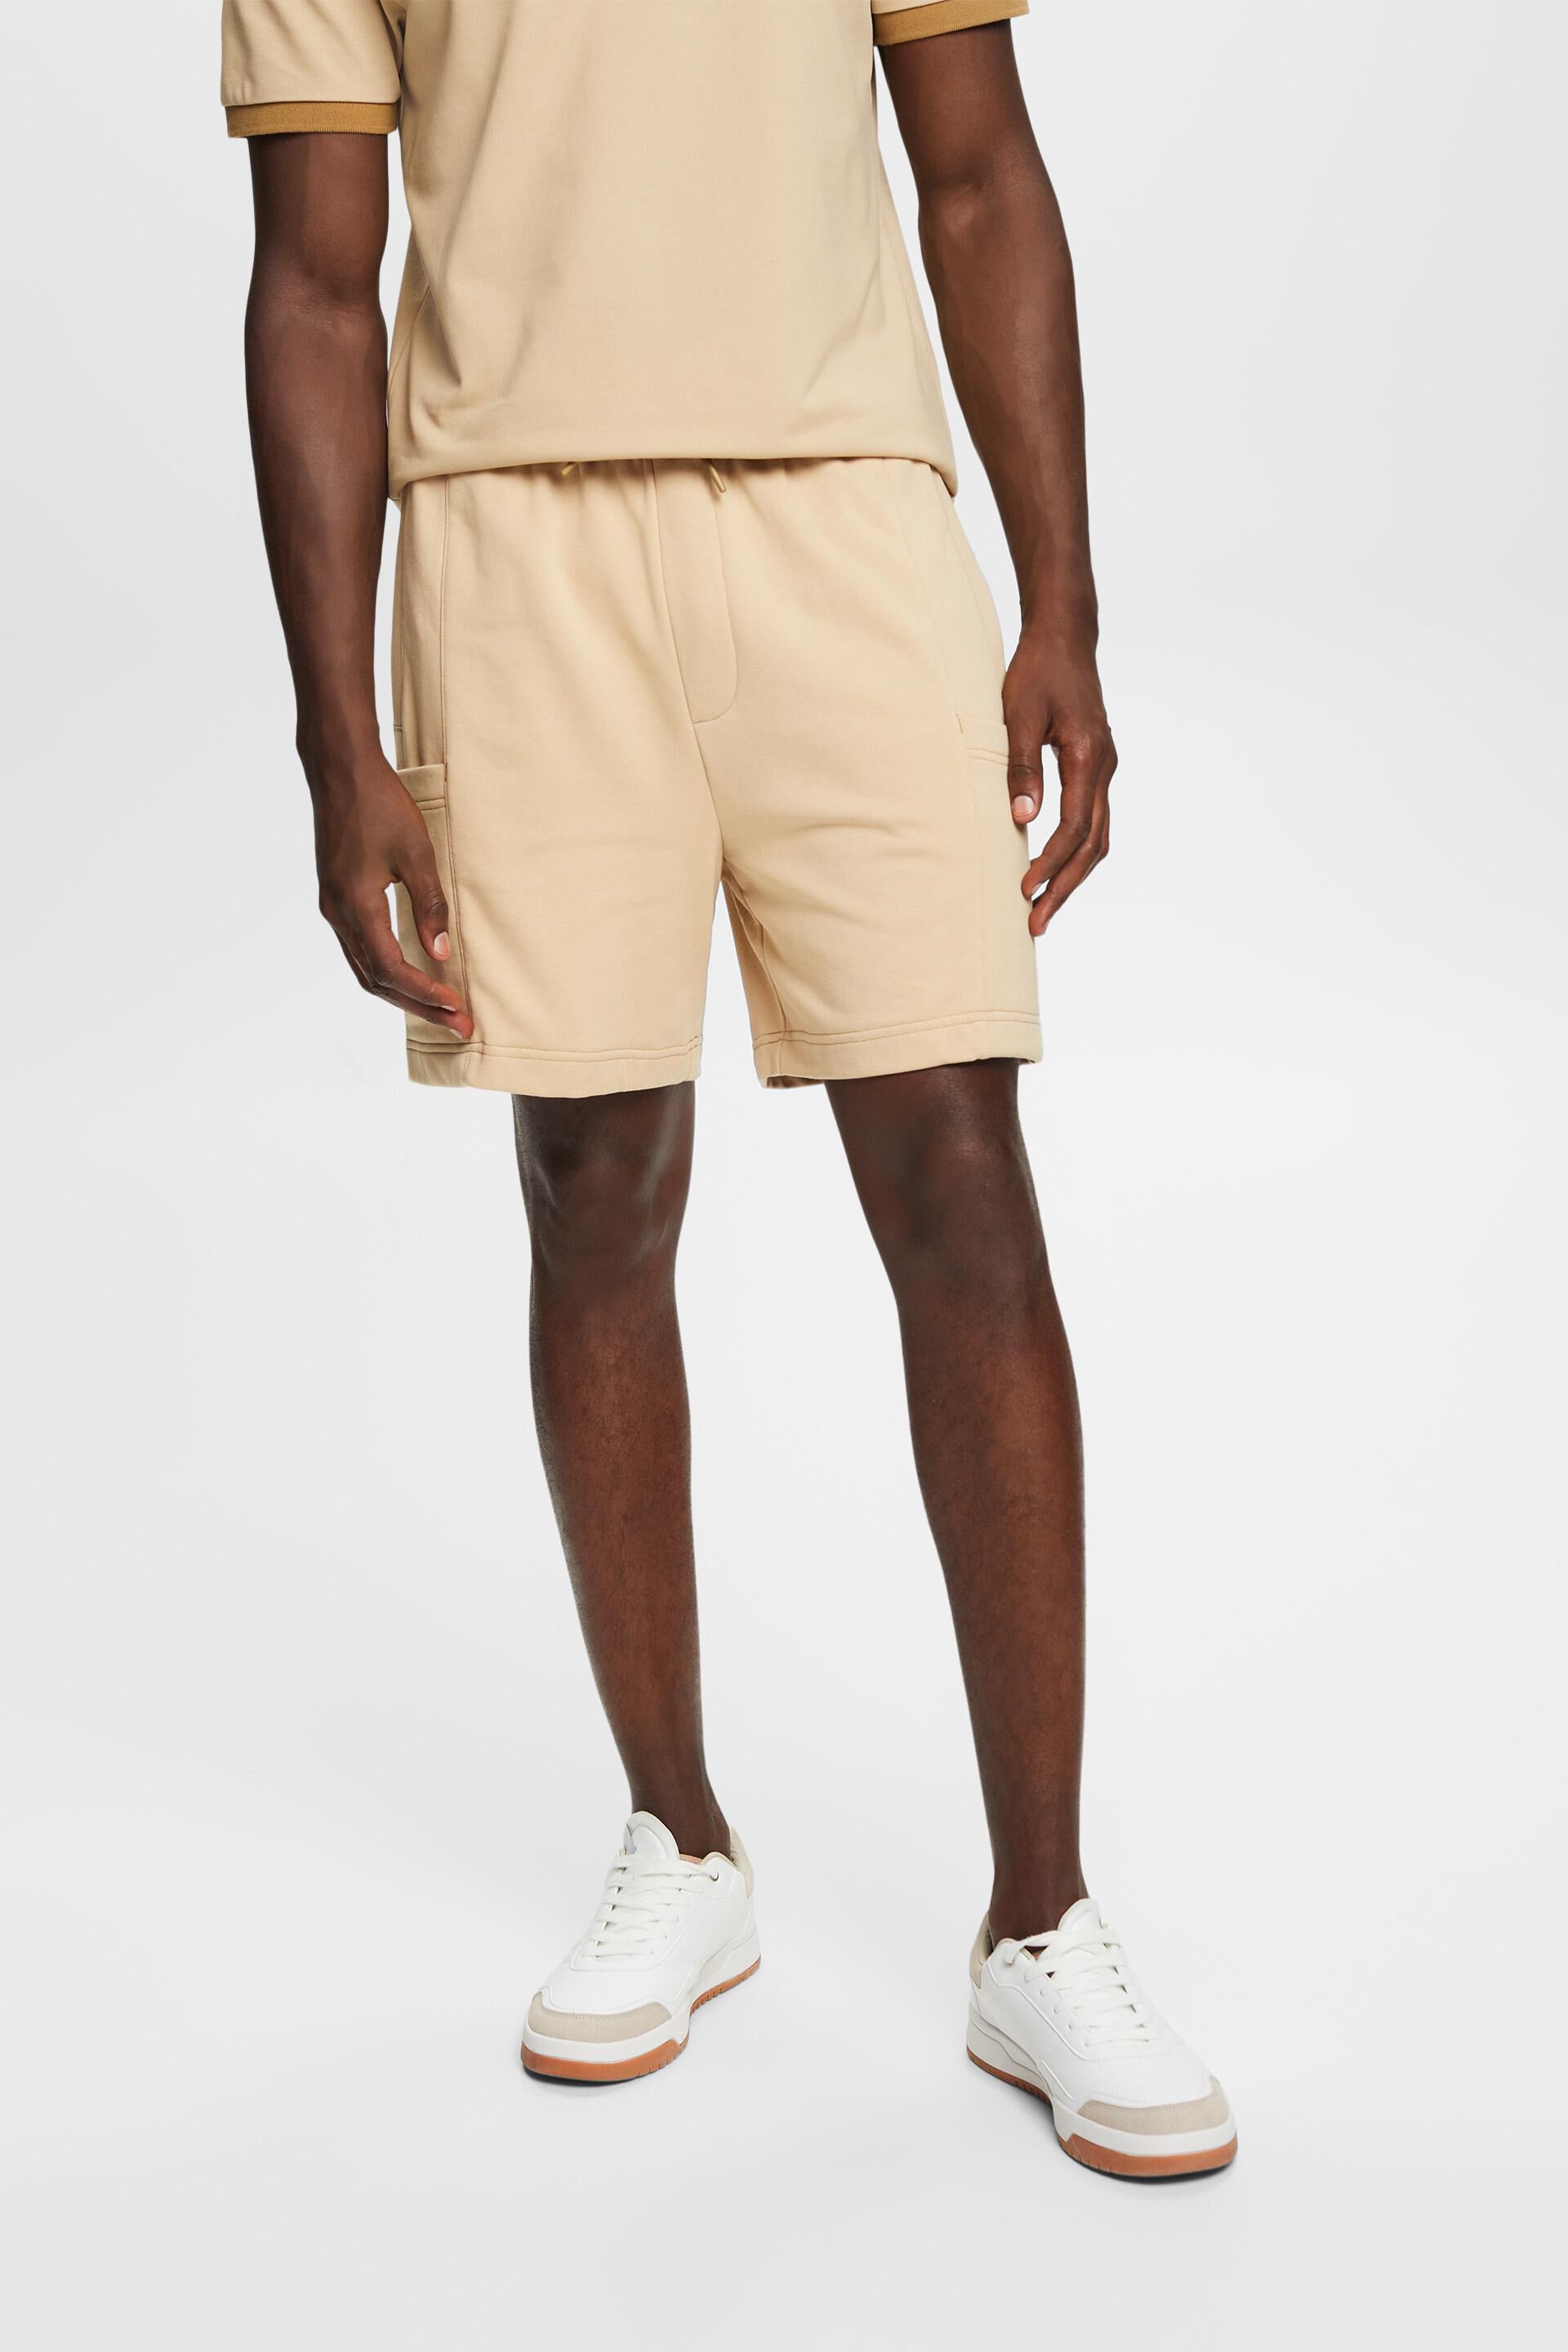 Esprit shorts Jogger-style